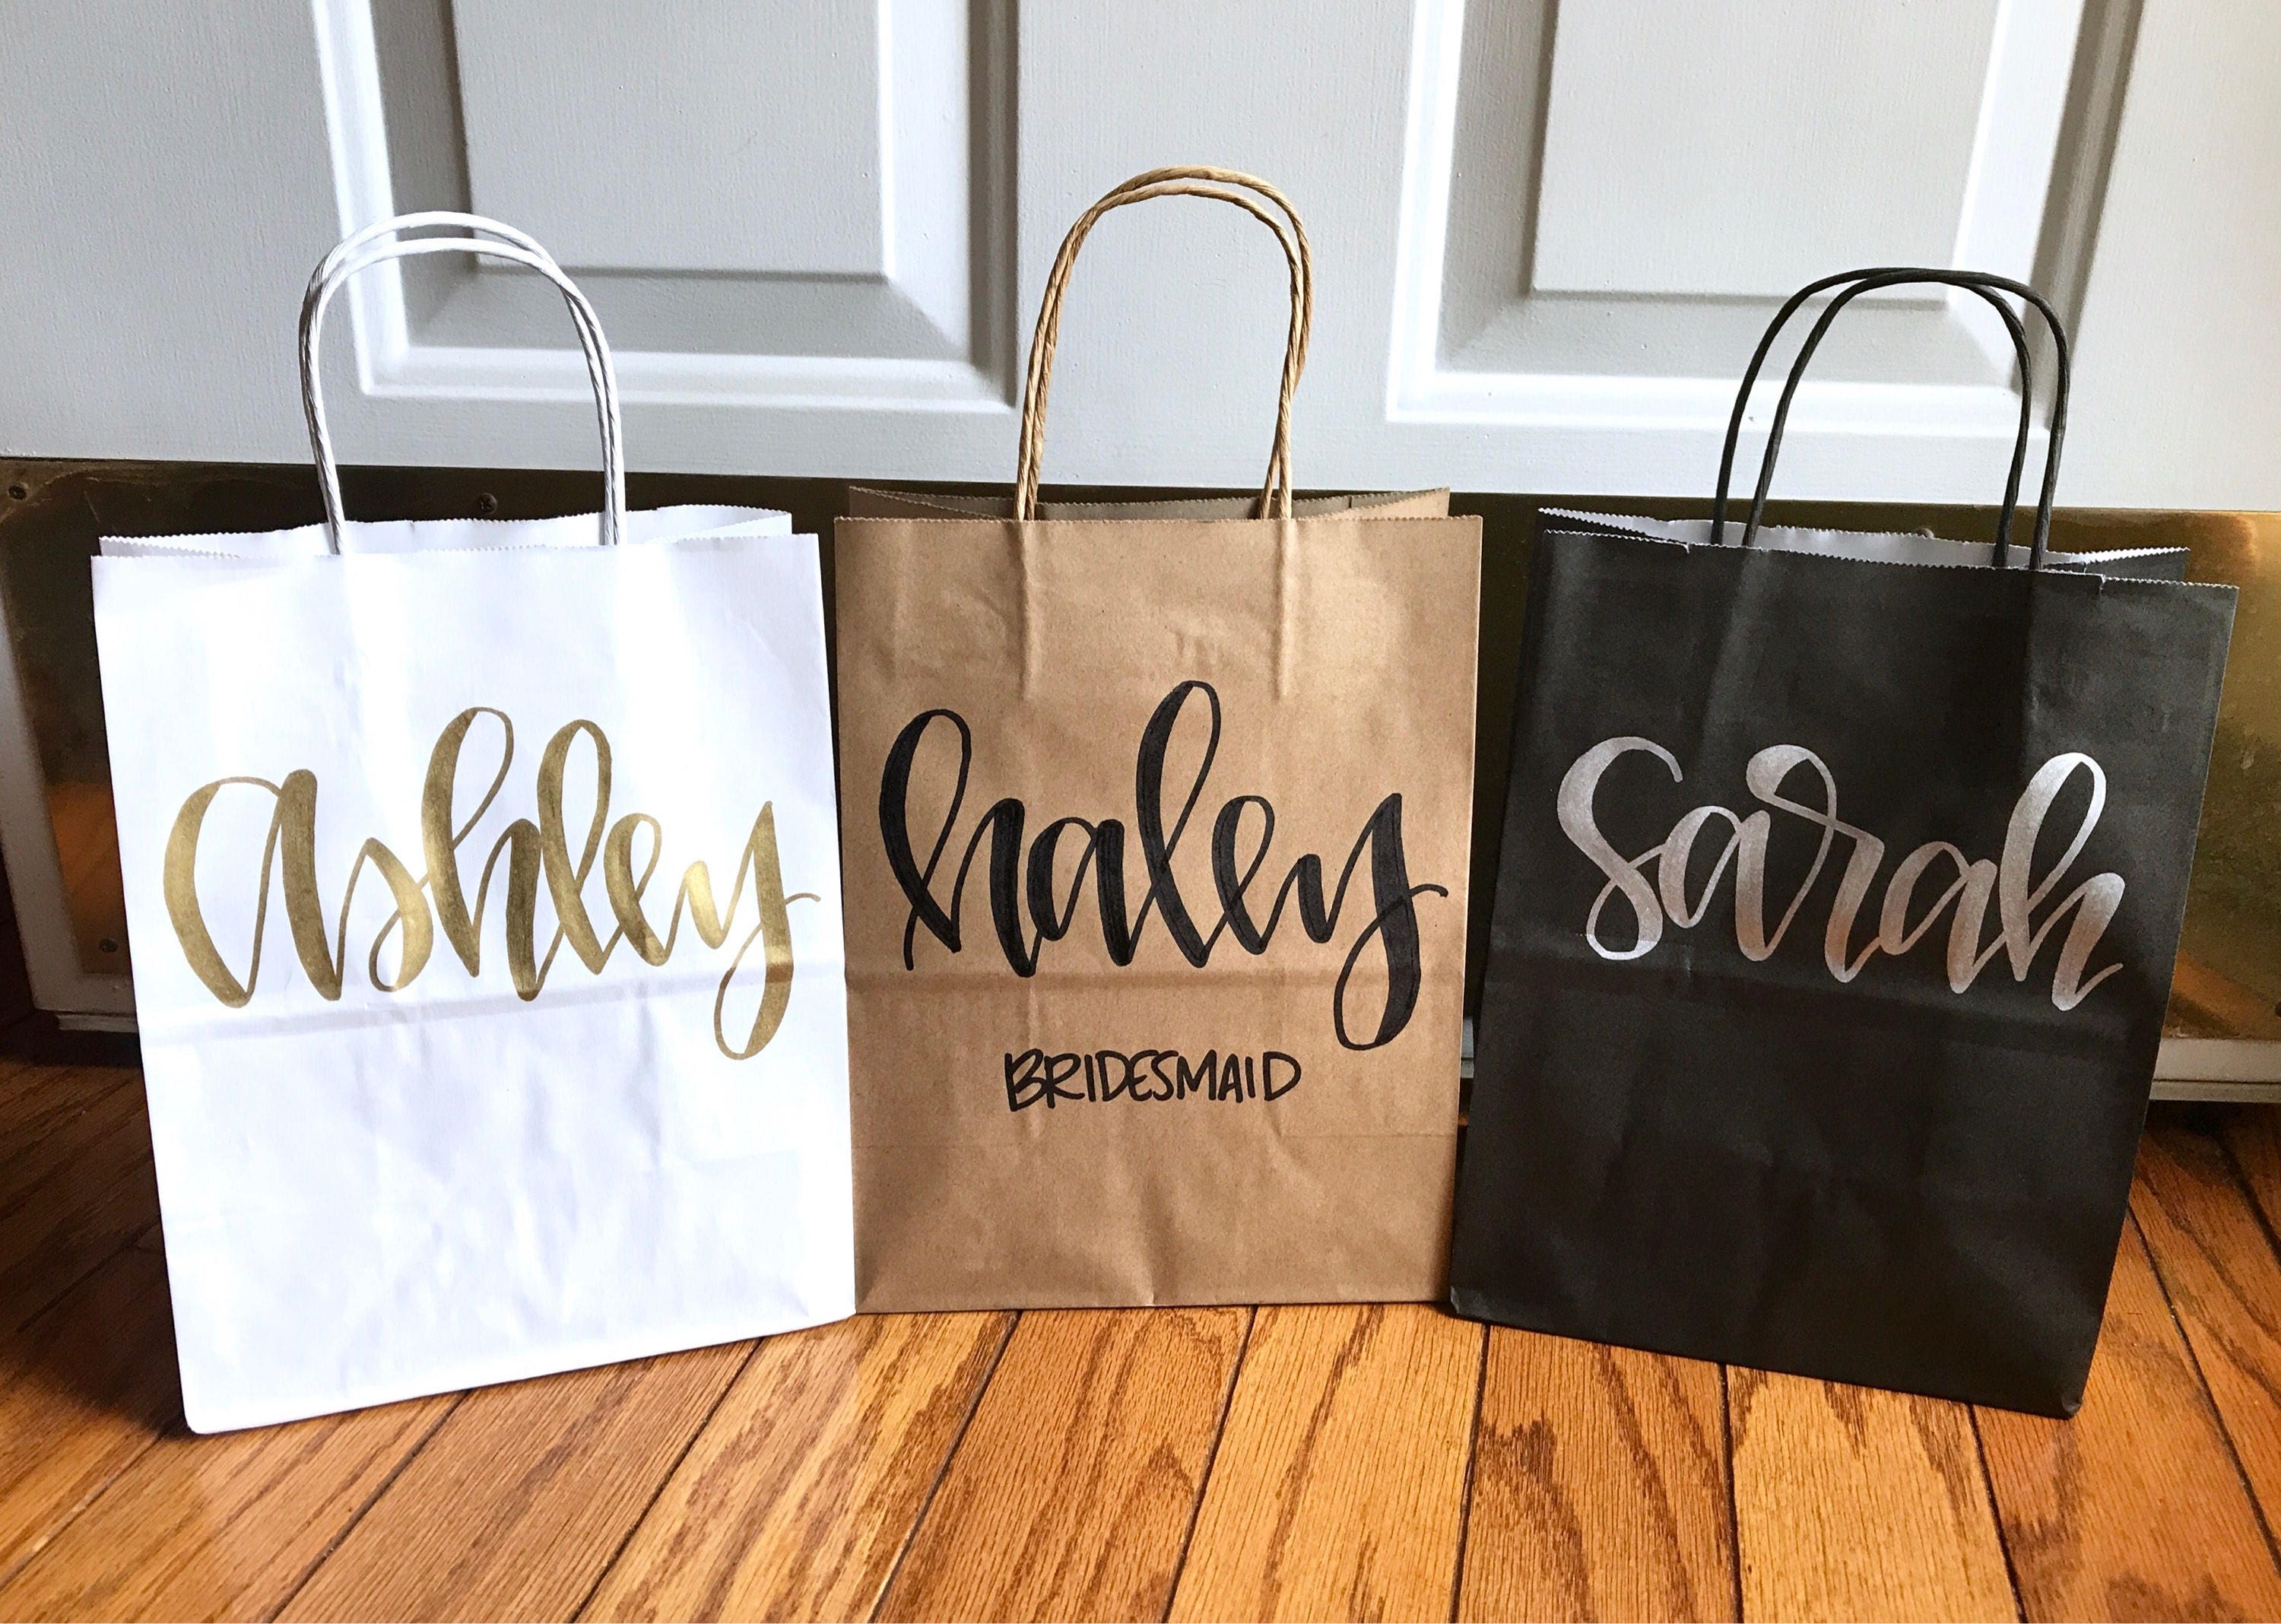 Custom name gift bags-bridesmaid gift bags groomsman gift